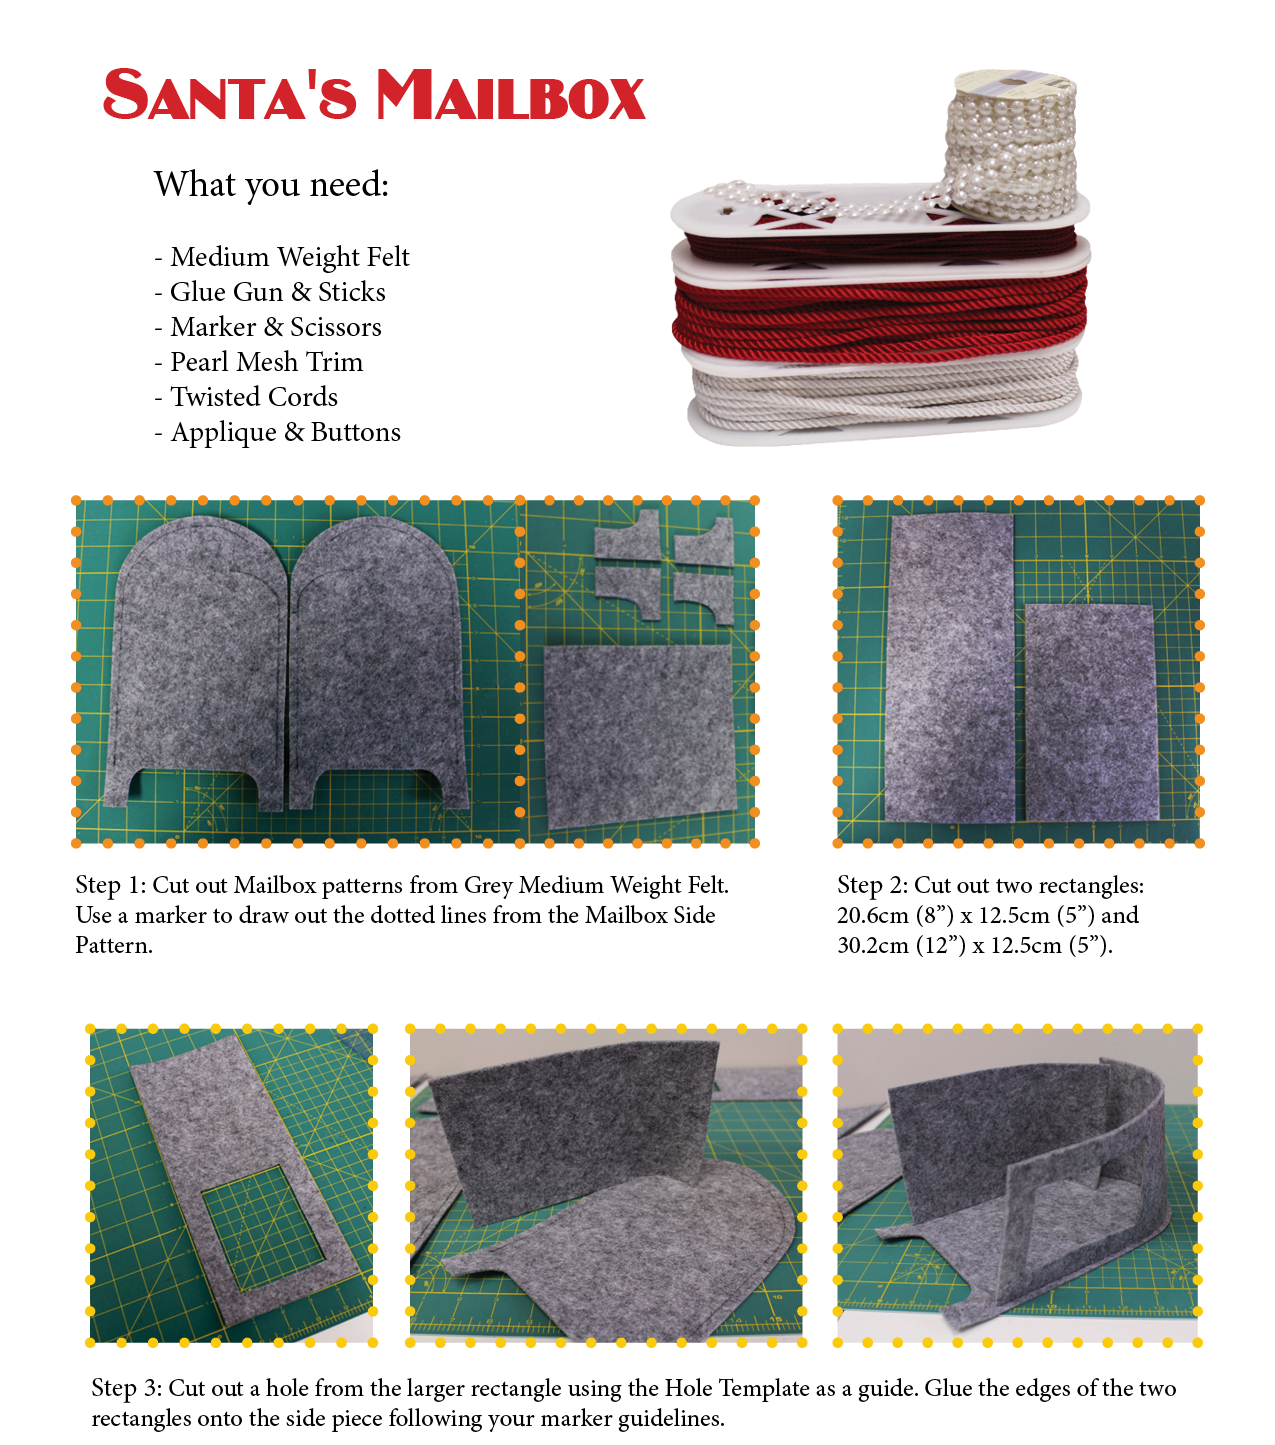 Steps to create your DIY Santa's Mailbox